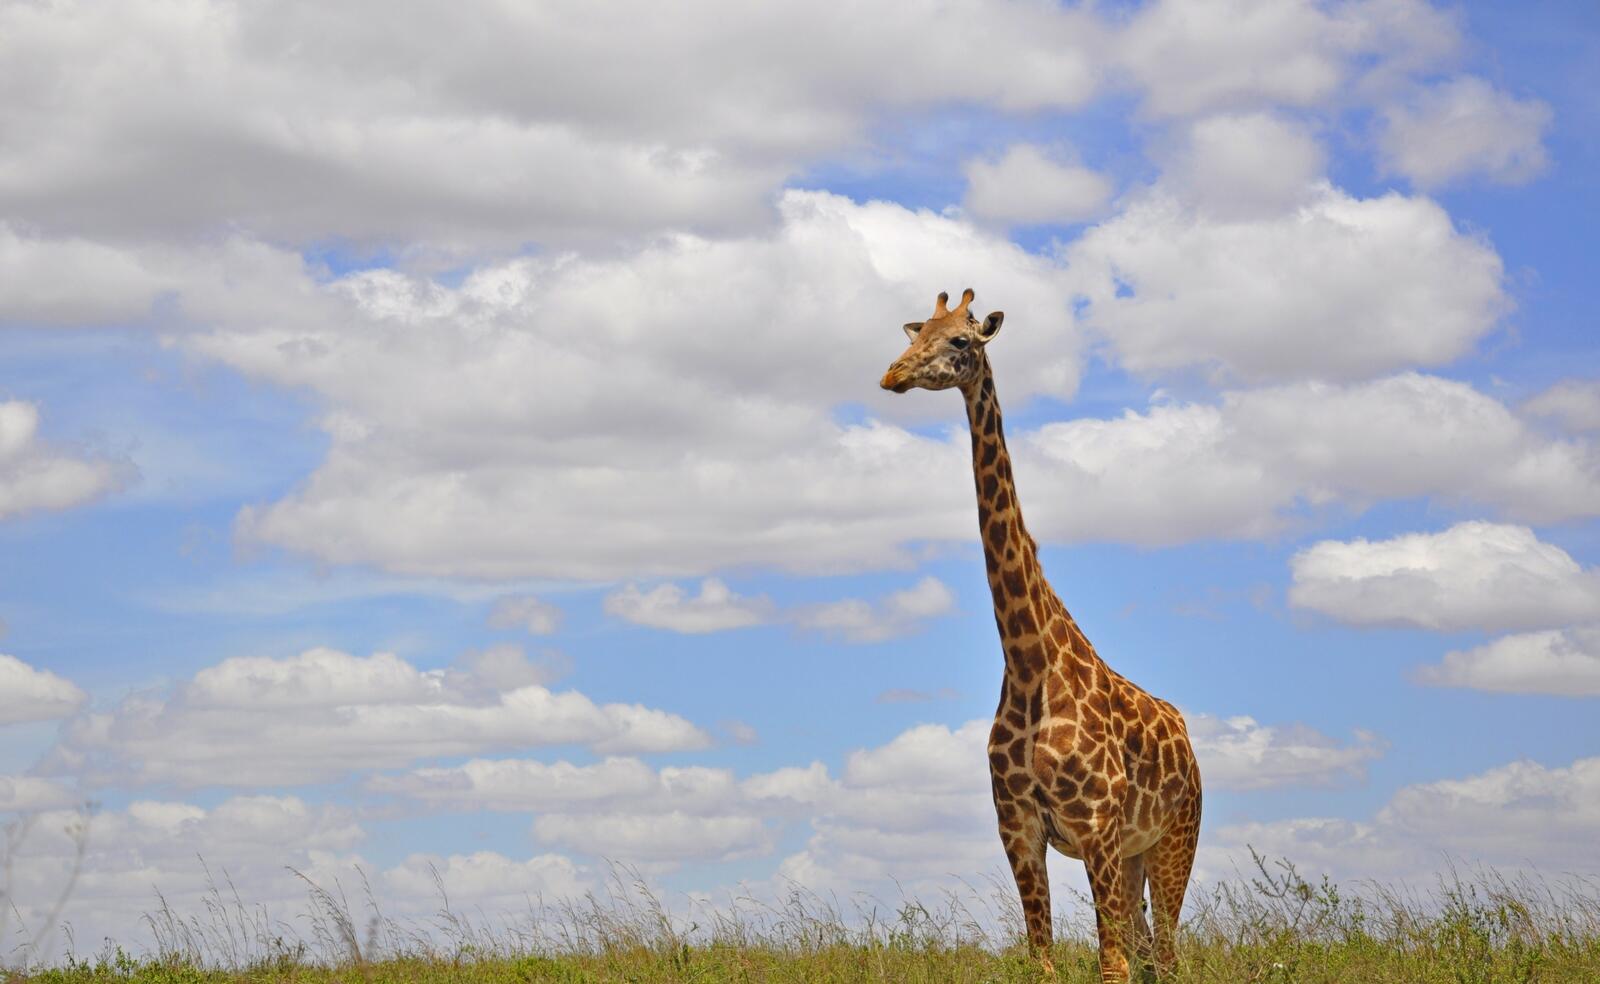 Free photo A giraffe walks in a grassy field.